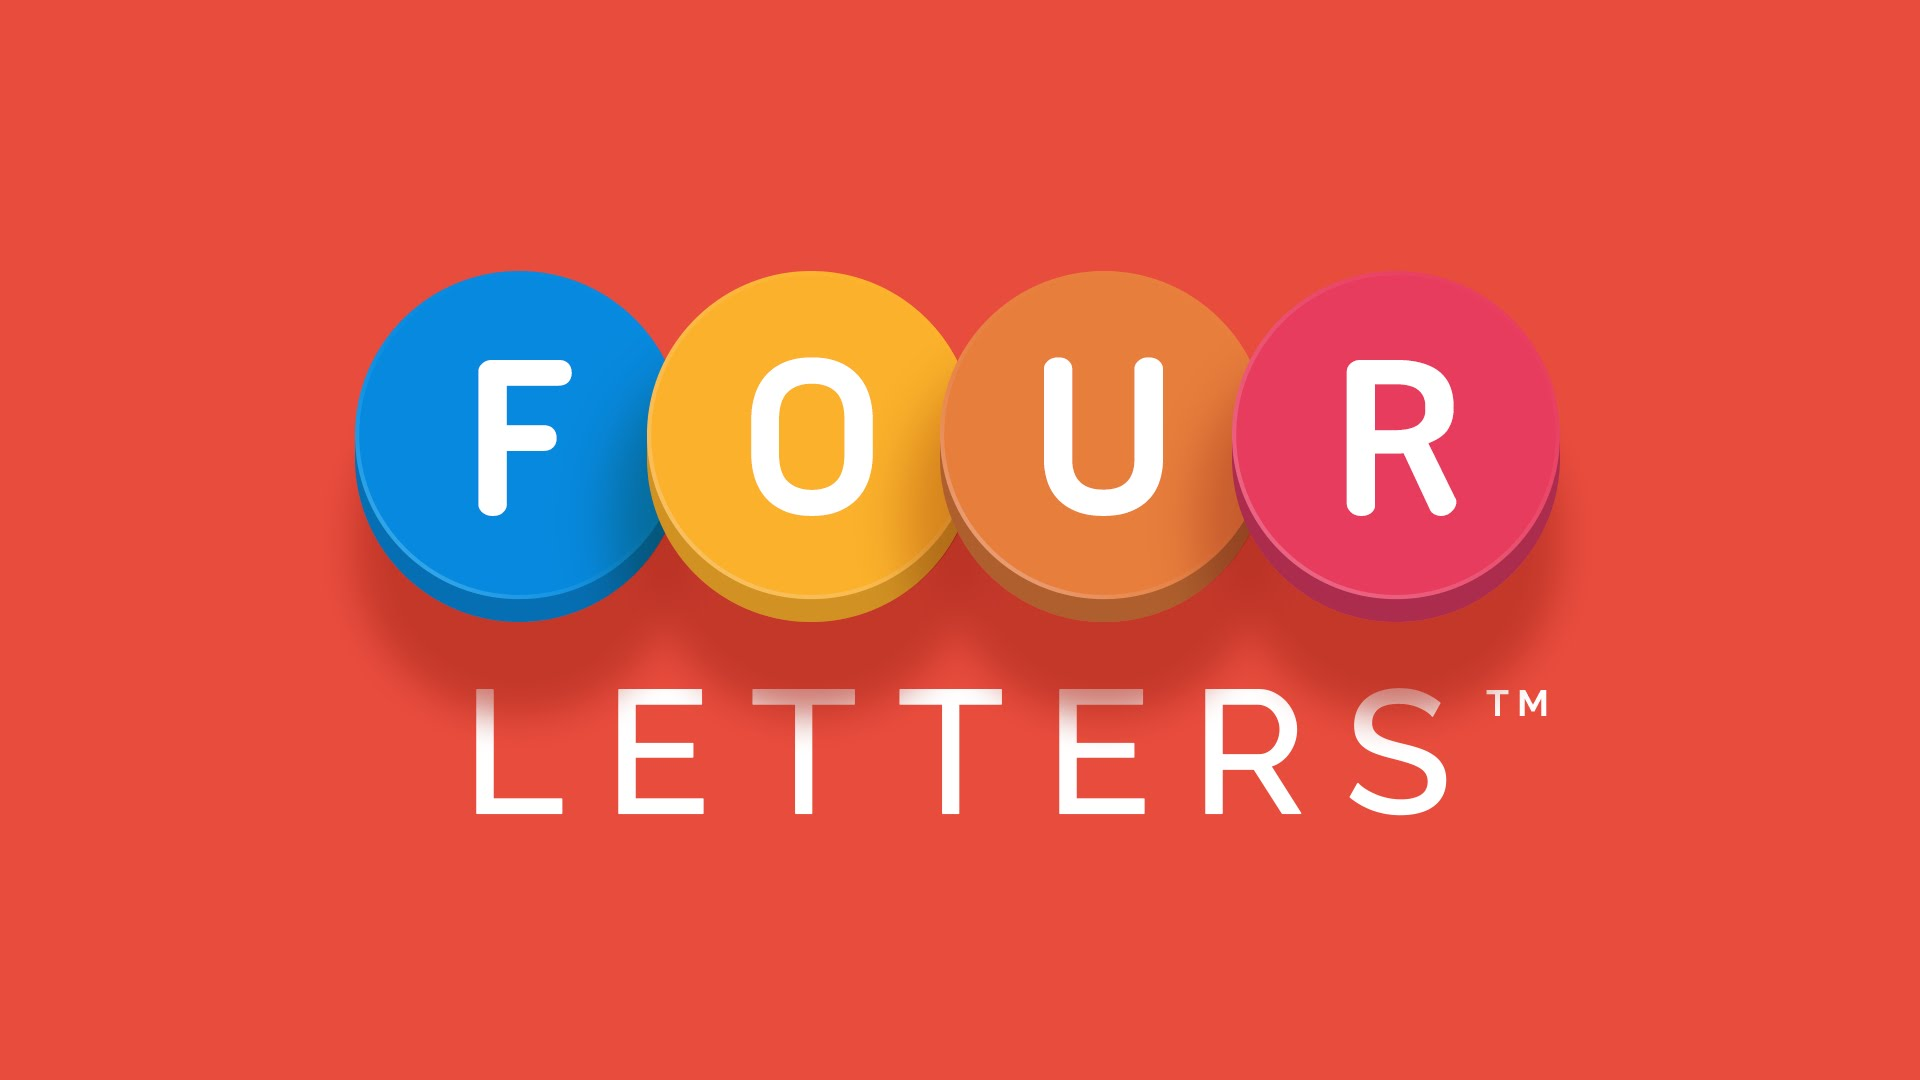 Letters game. Four Letter Words. 4 You. Four Letters logo. Слово четыре первая к